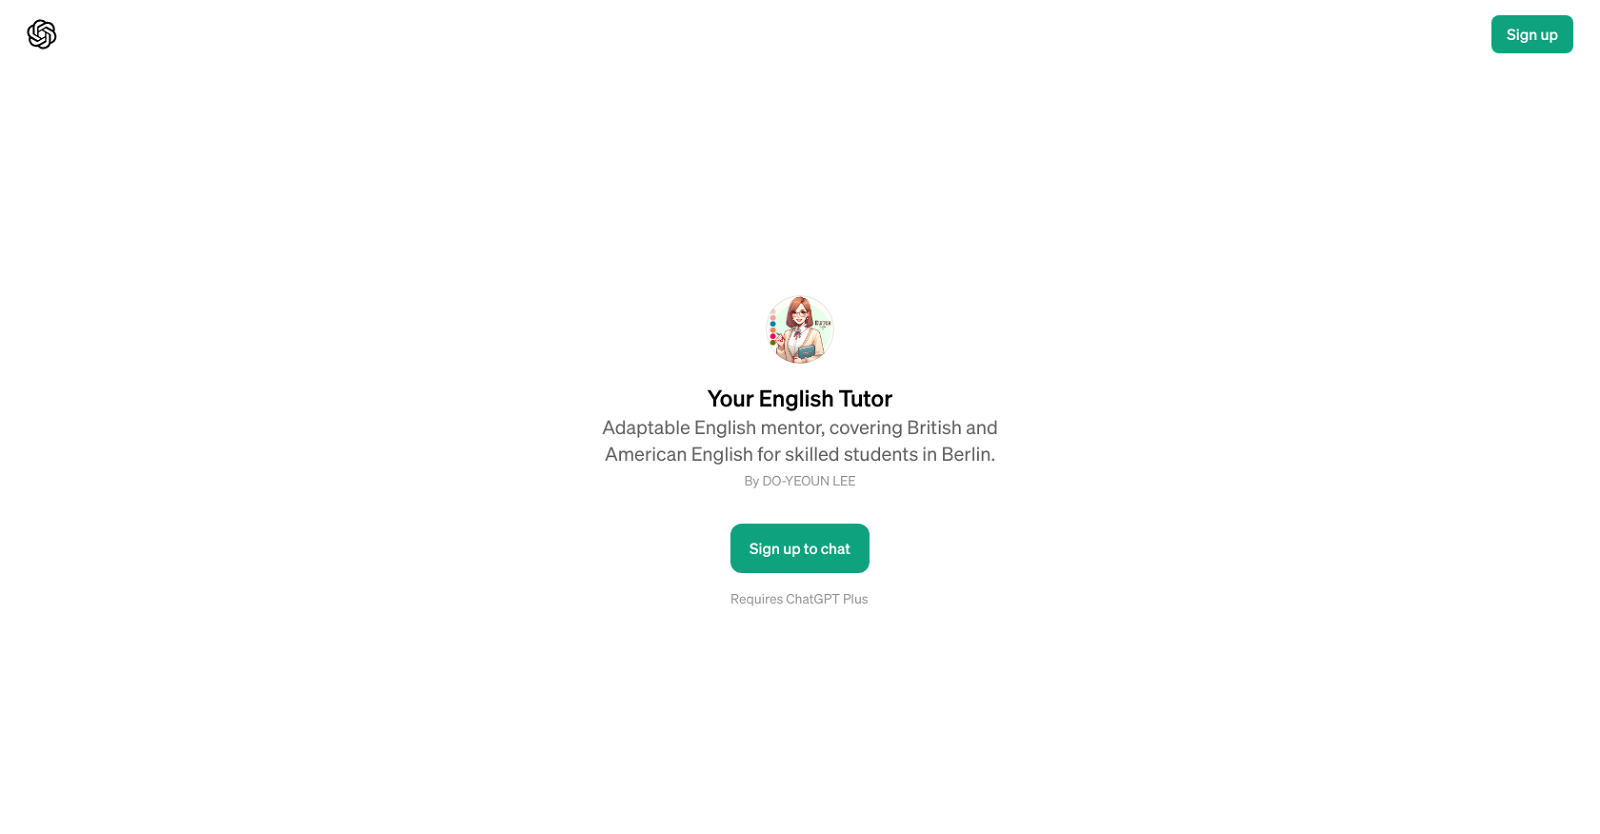 Your English Tutor website